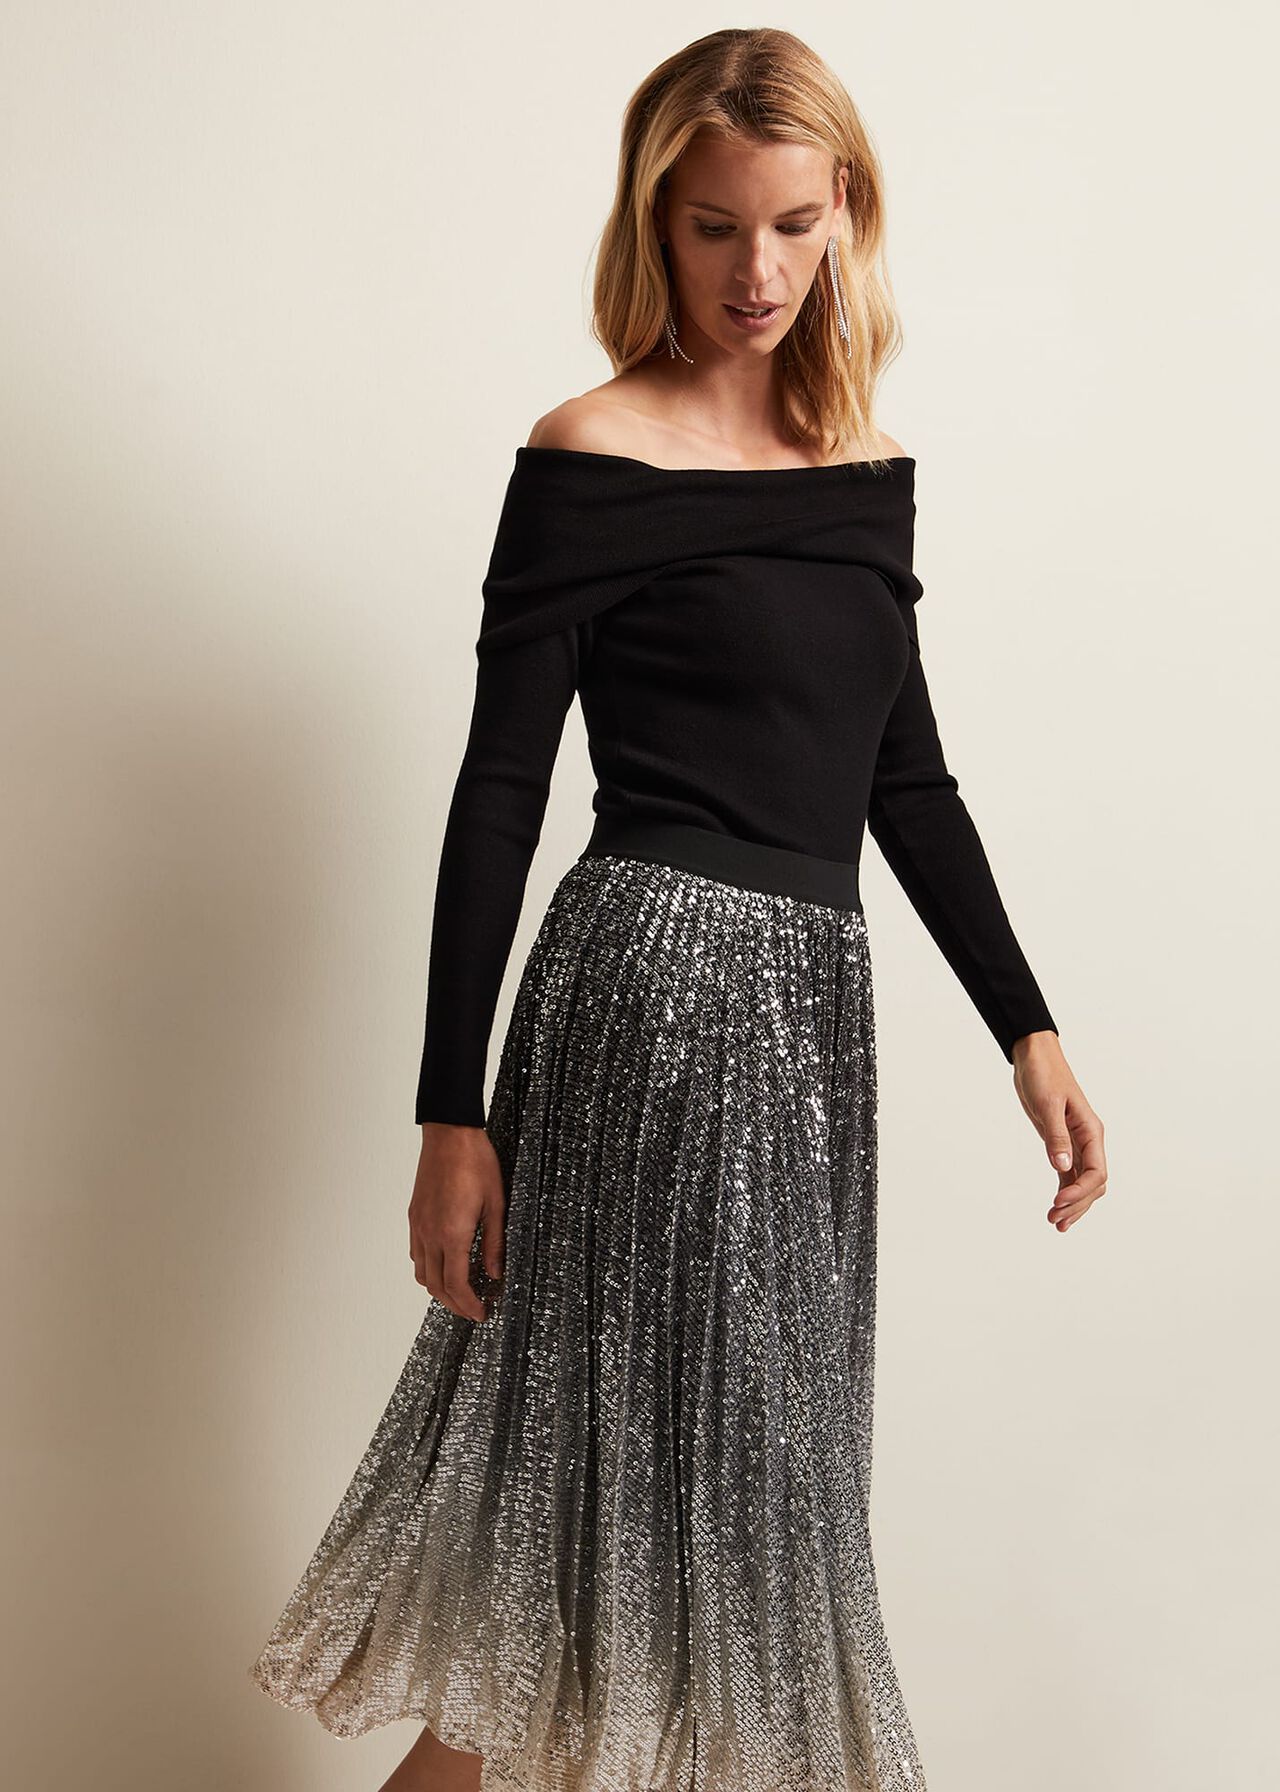 Celeste Sequin Ombre Pleated Midi Skirt